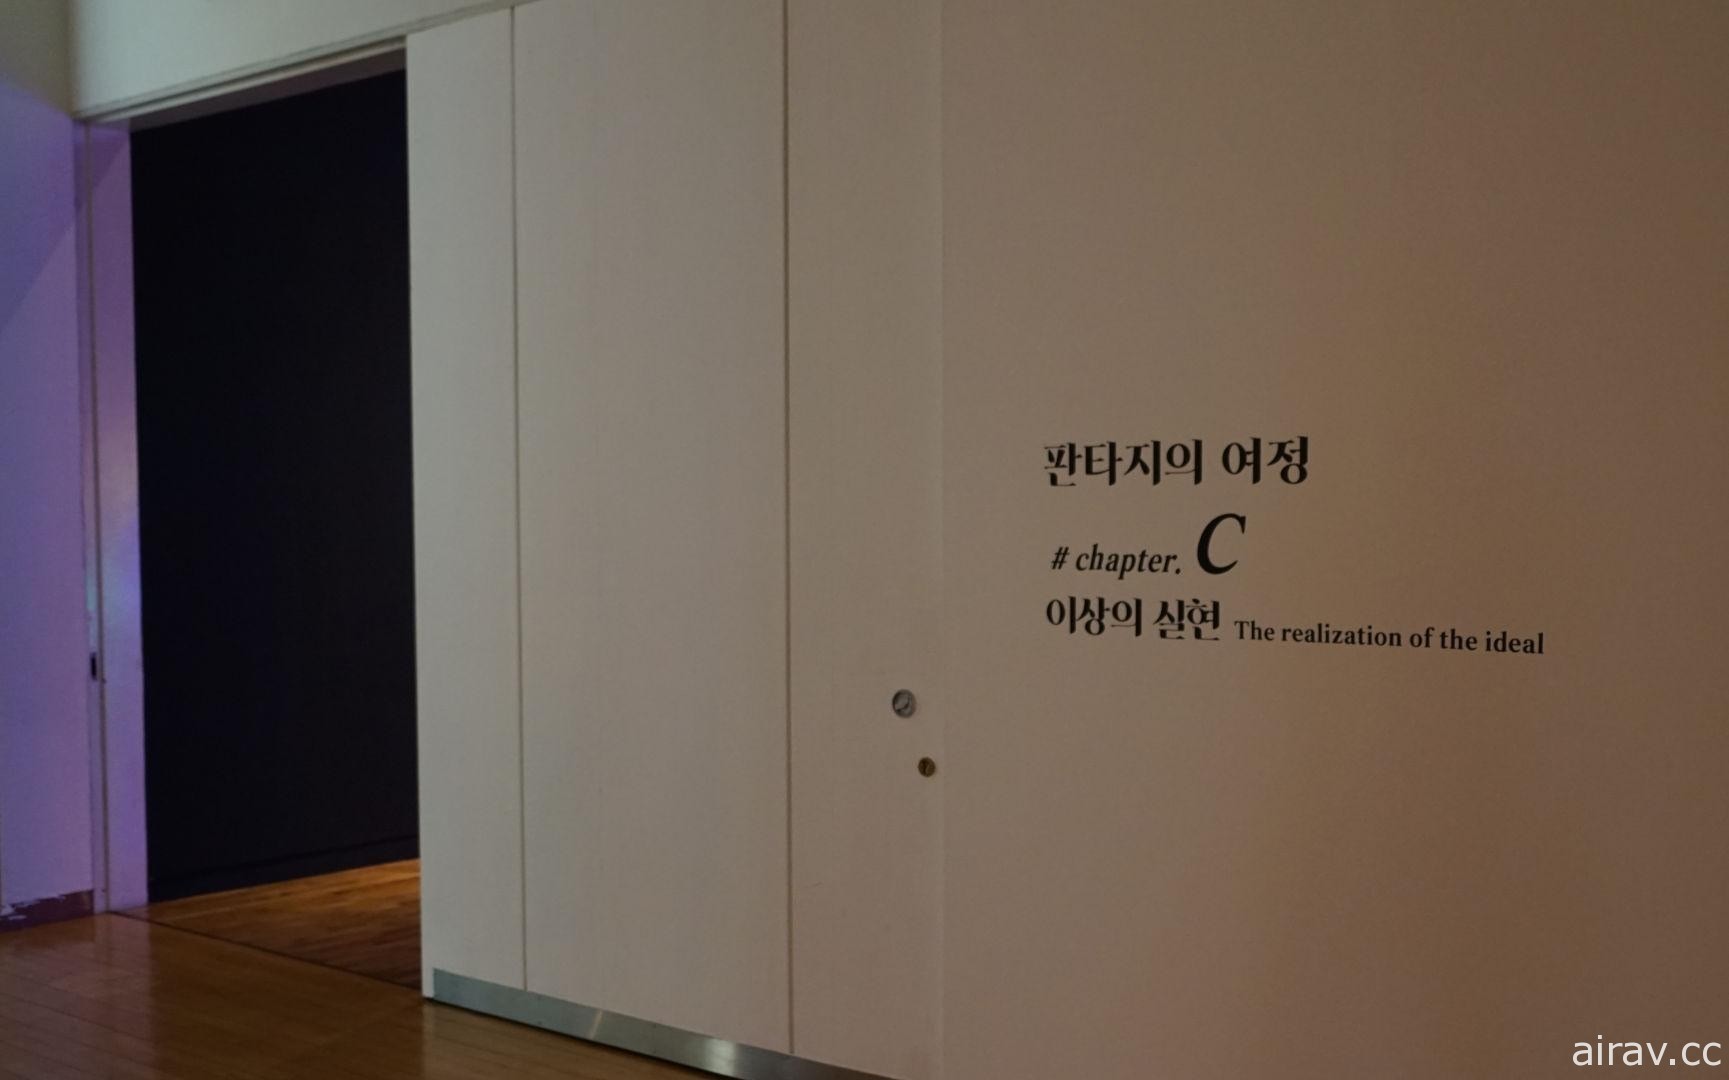 【G★2021】《RO 仙境传说》韩版将届满 20 周年 营运团队举办美术特展“幻想的旅途”